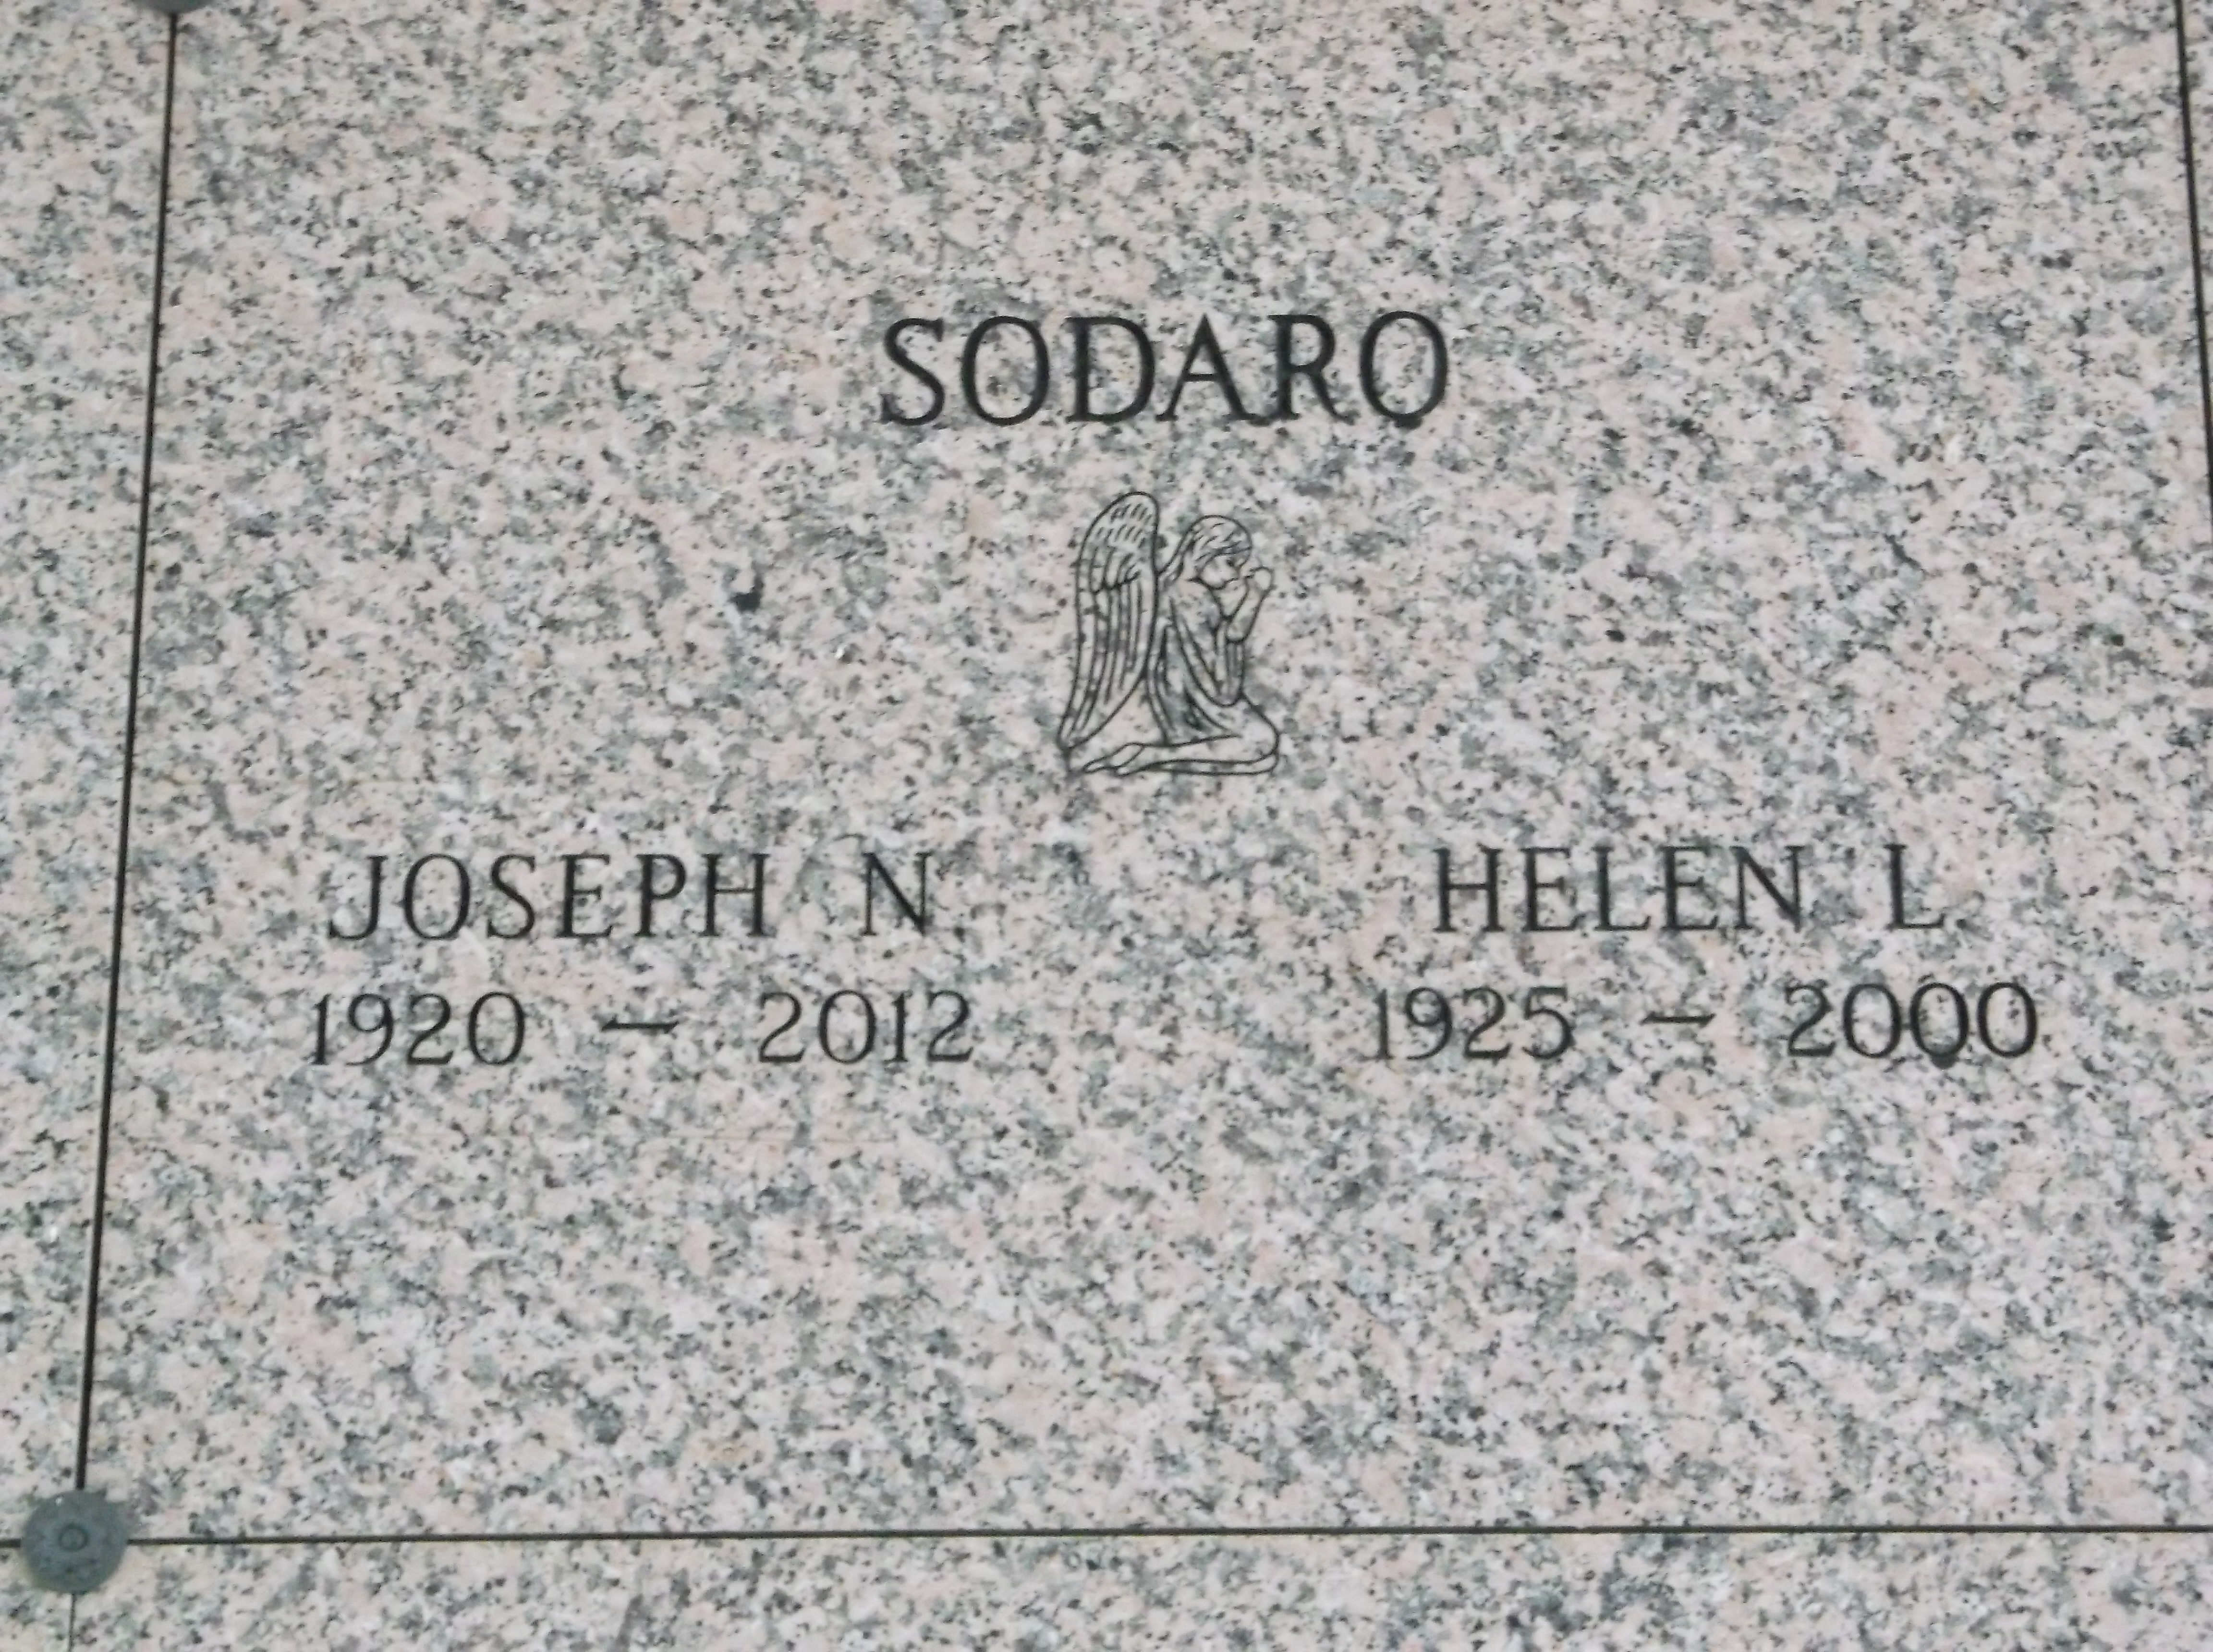 Joseph N Sodaro